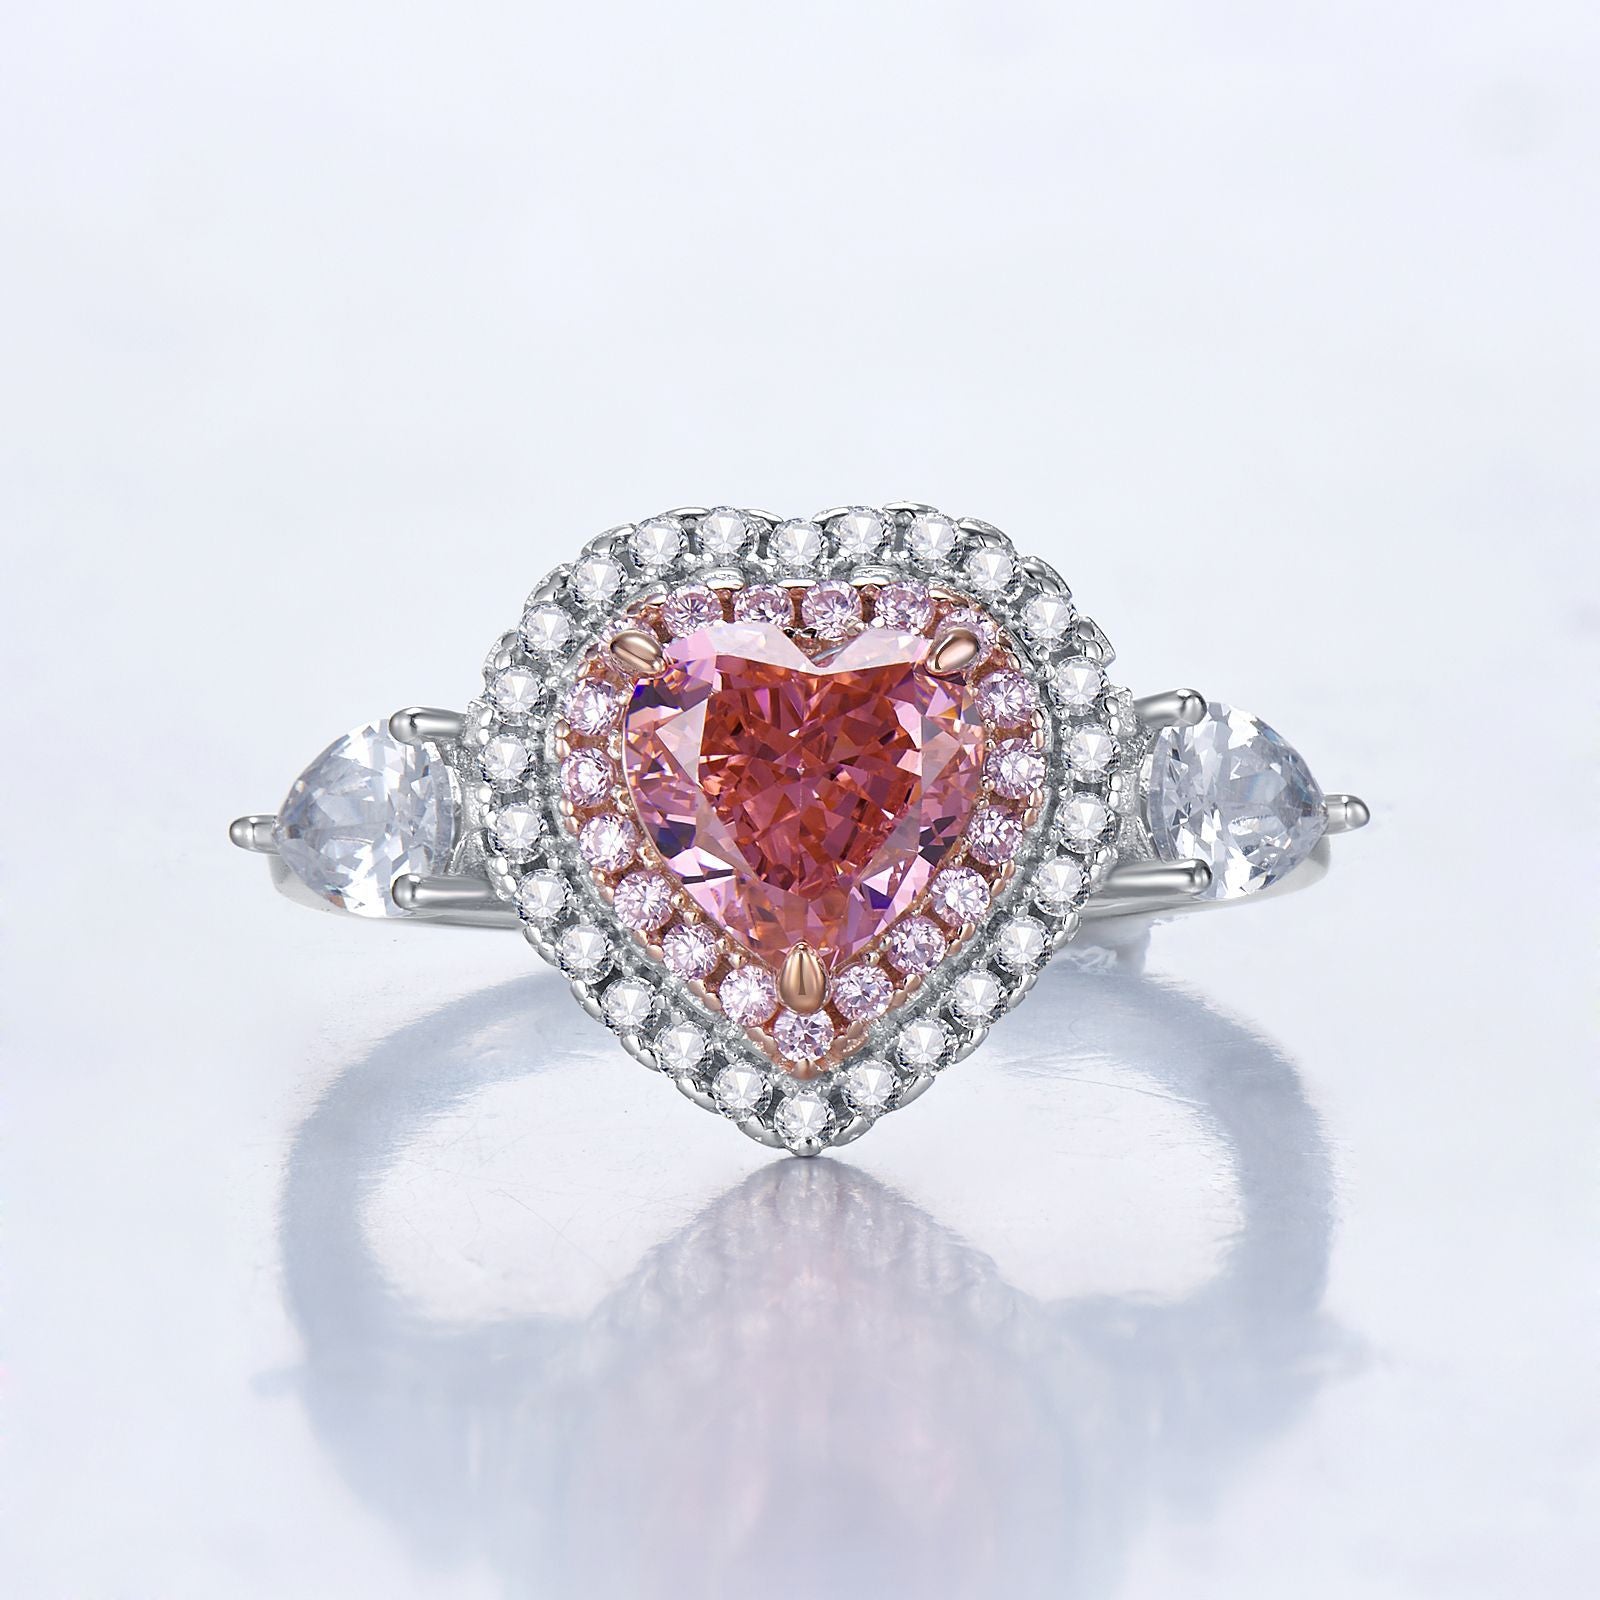 Sterling Silver Heart Diamond Ring Size 7 | eBay